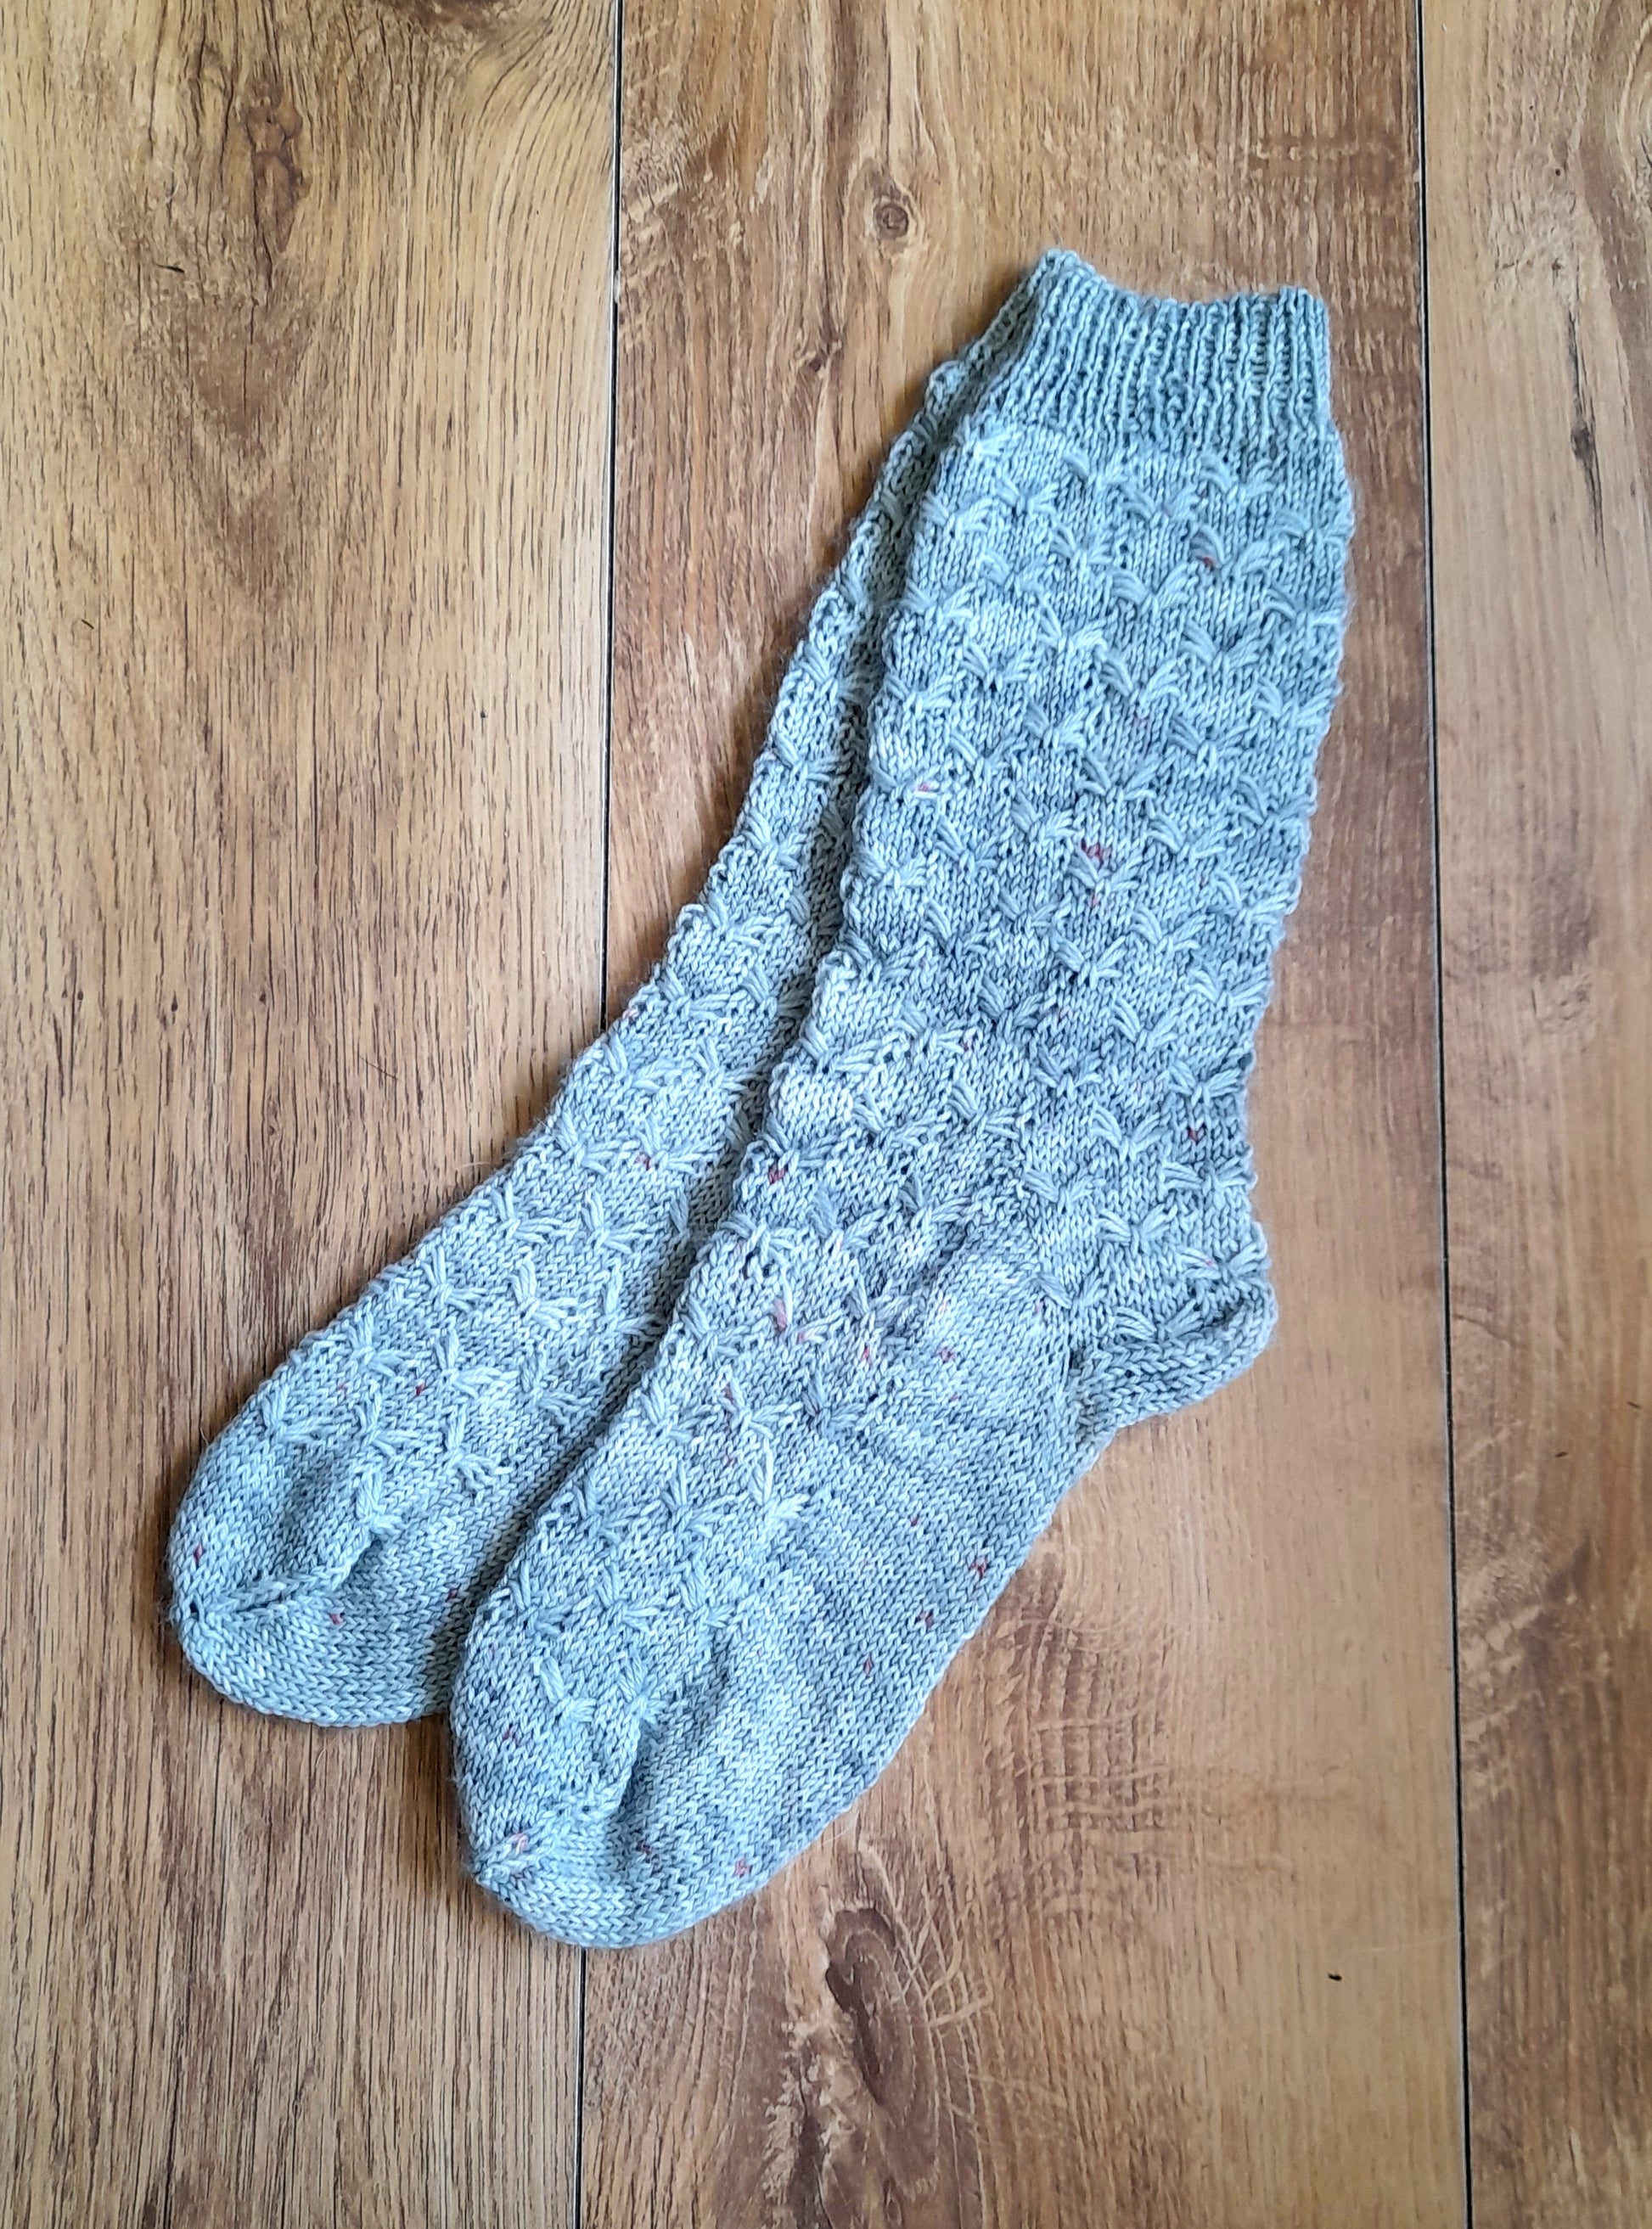 knitted socks using eden cottage yarns oakworth 4ply. 